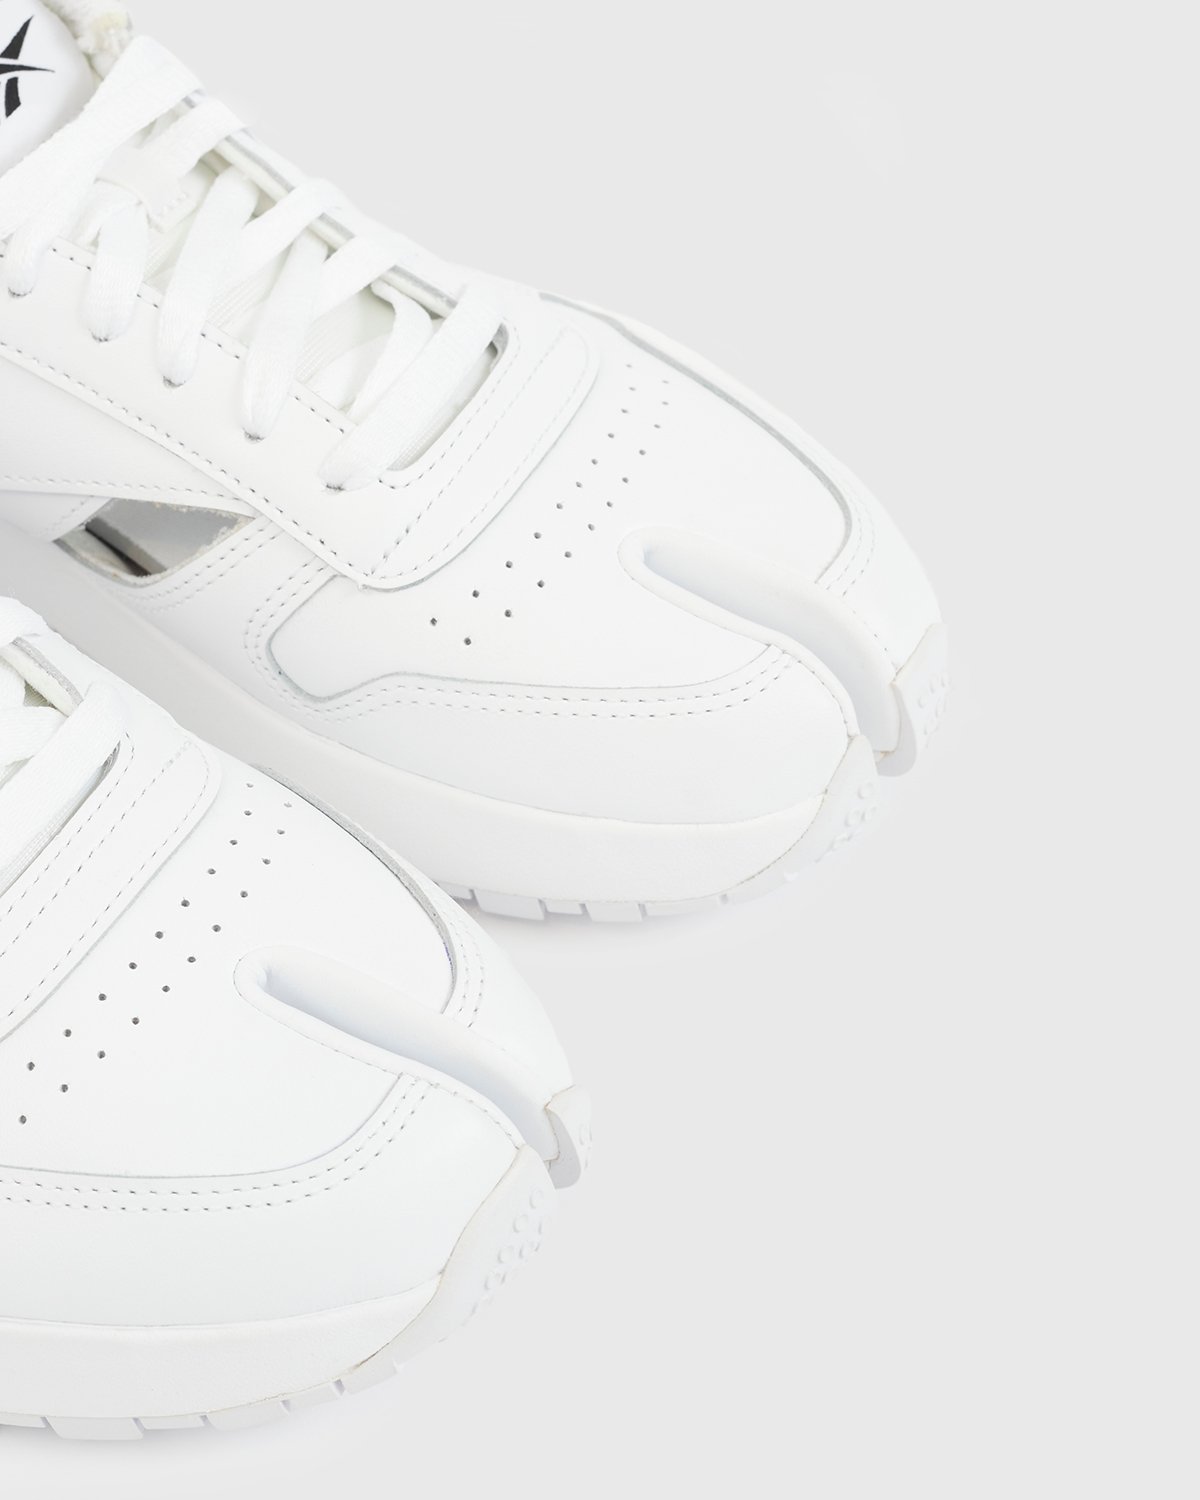 Maison Margiela x Reebok - Classic Leather Tabi Low White - Footwear - White - Image 4